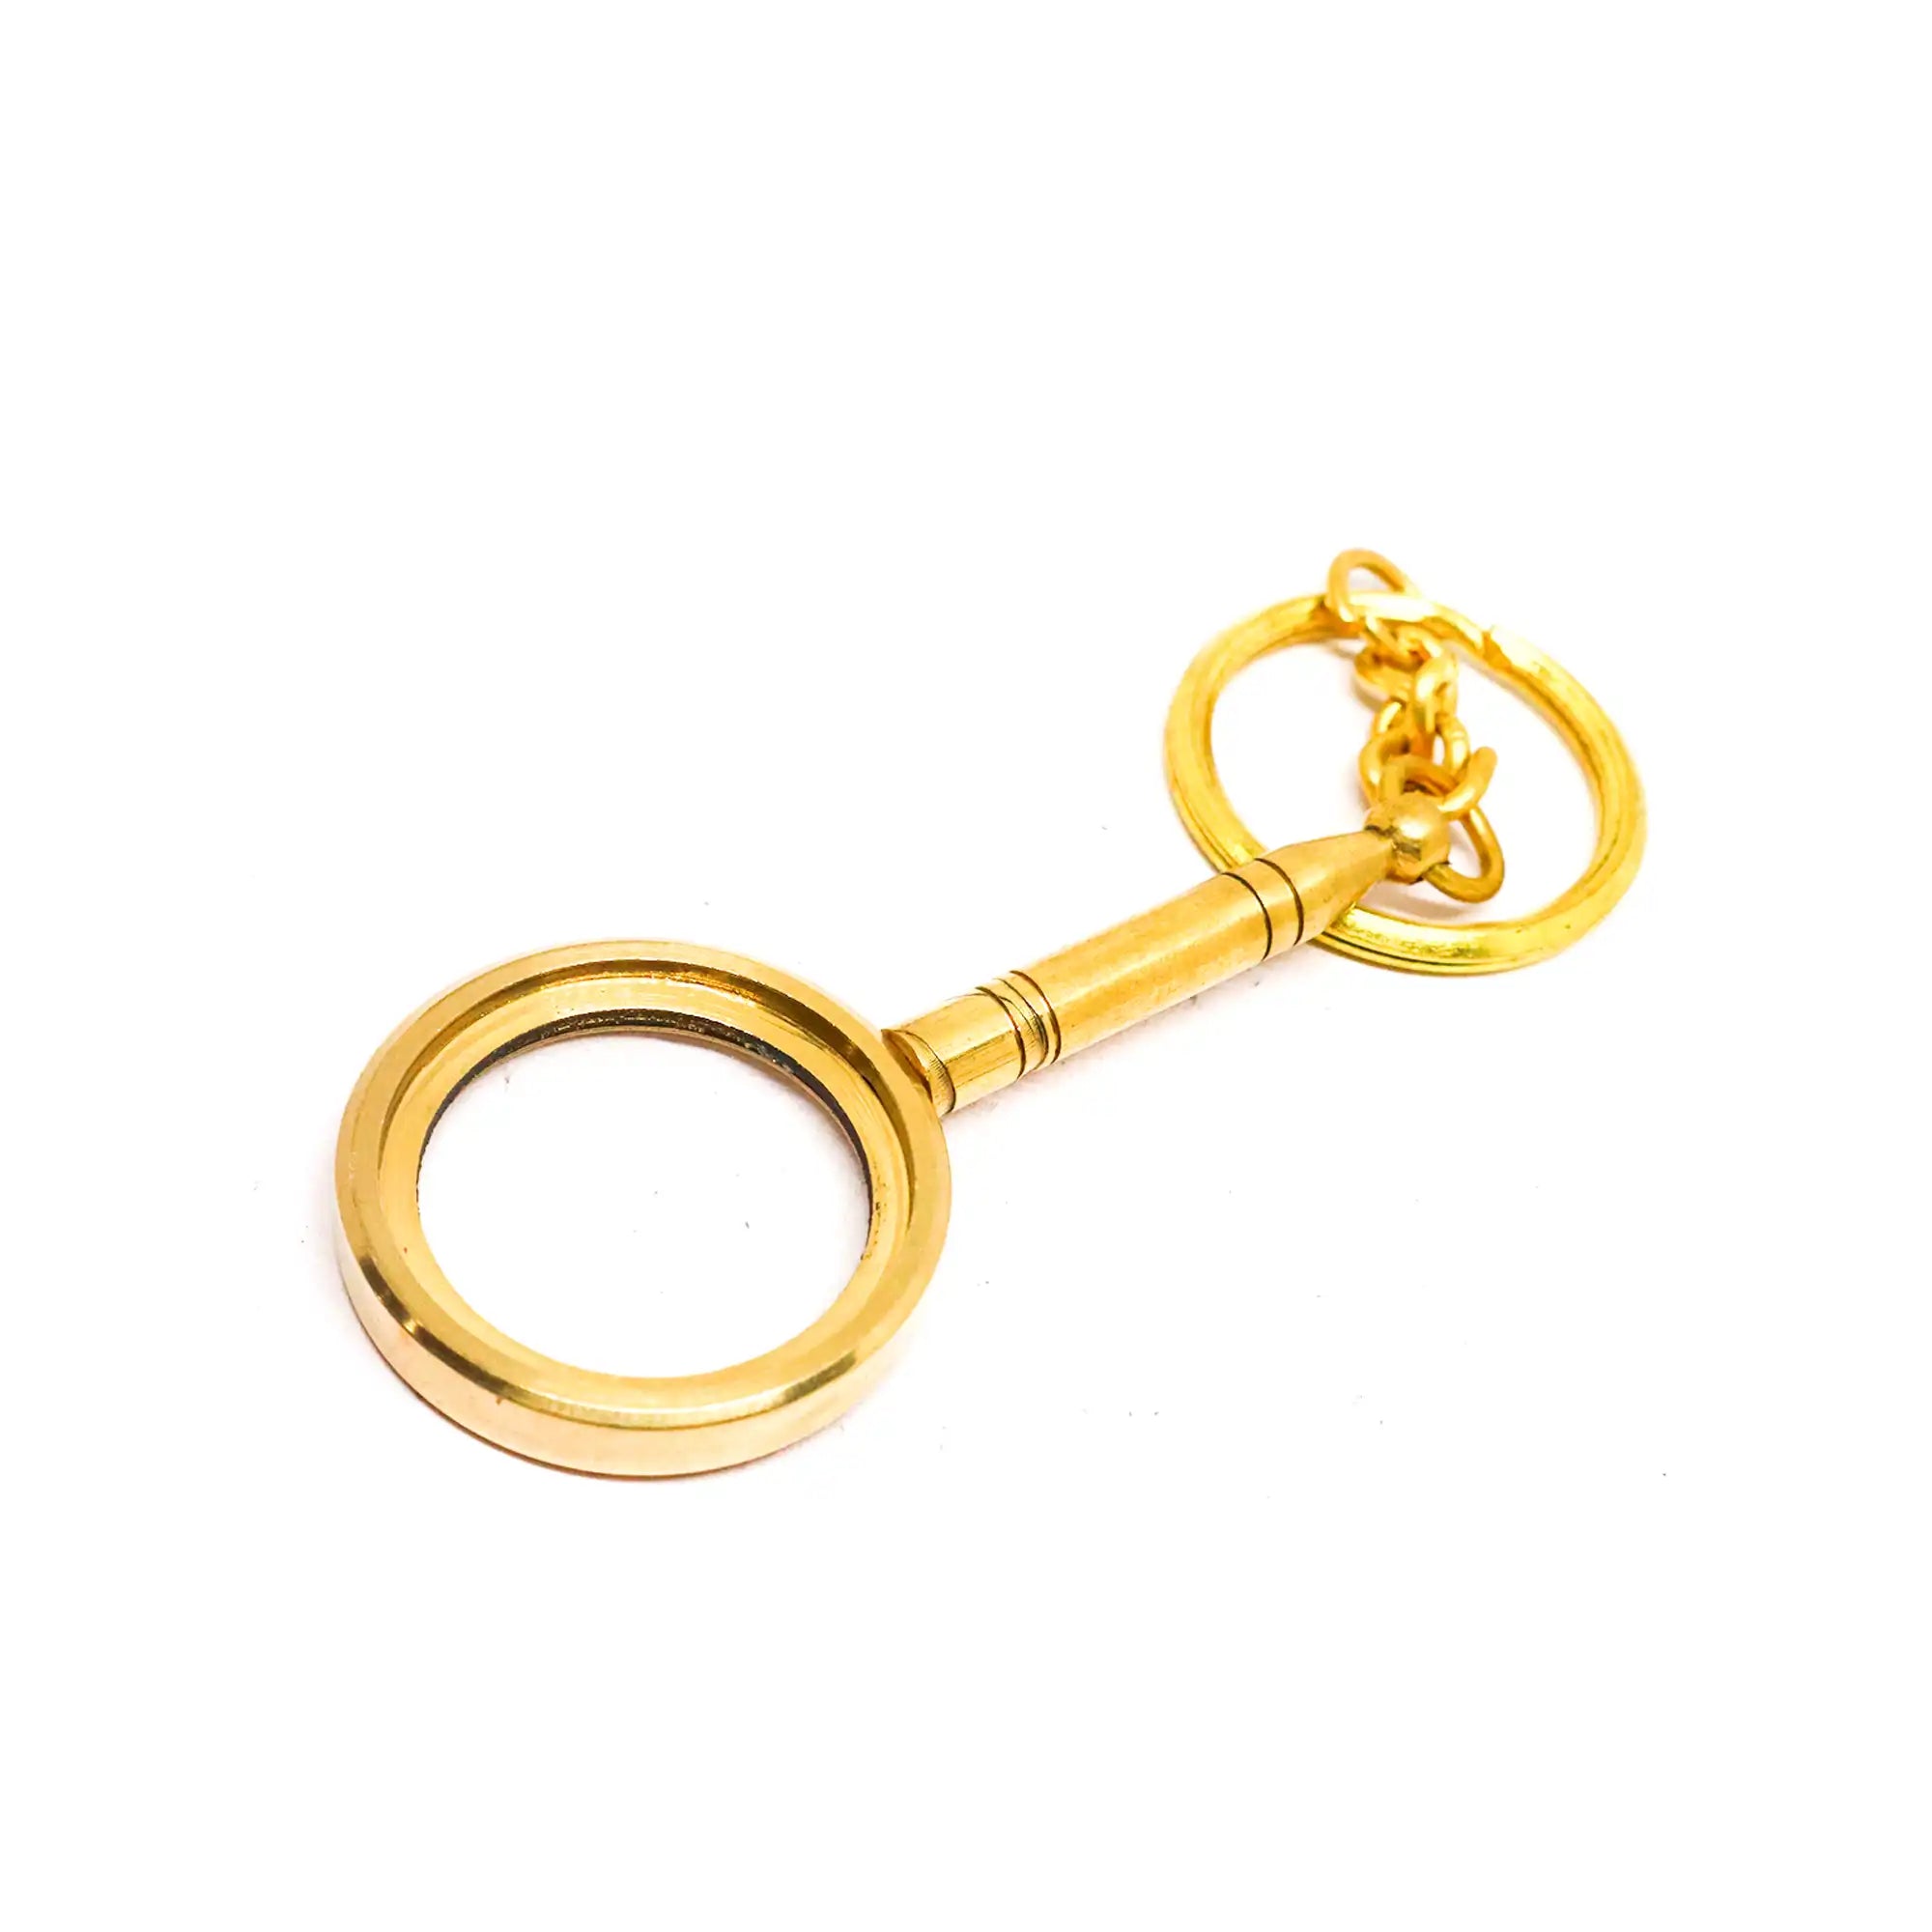 Brass Magnifier Key Ring BMKR01